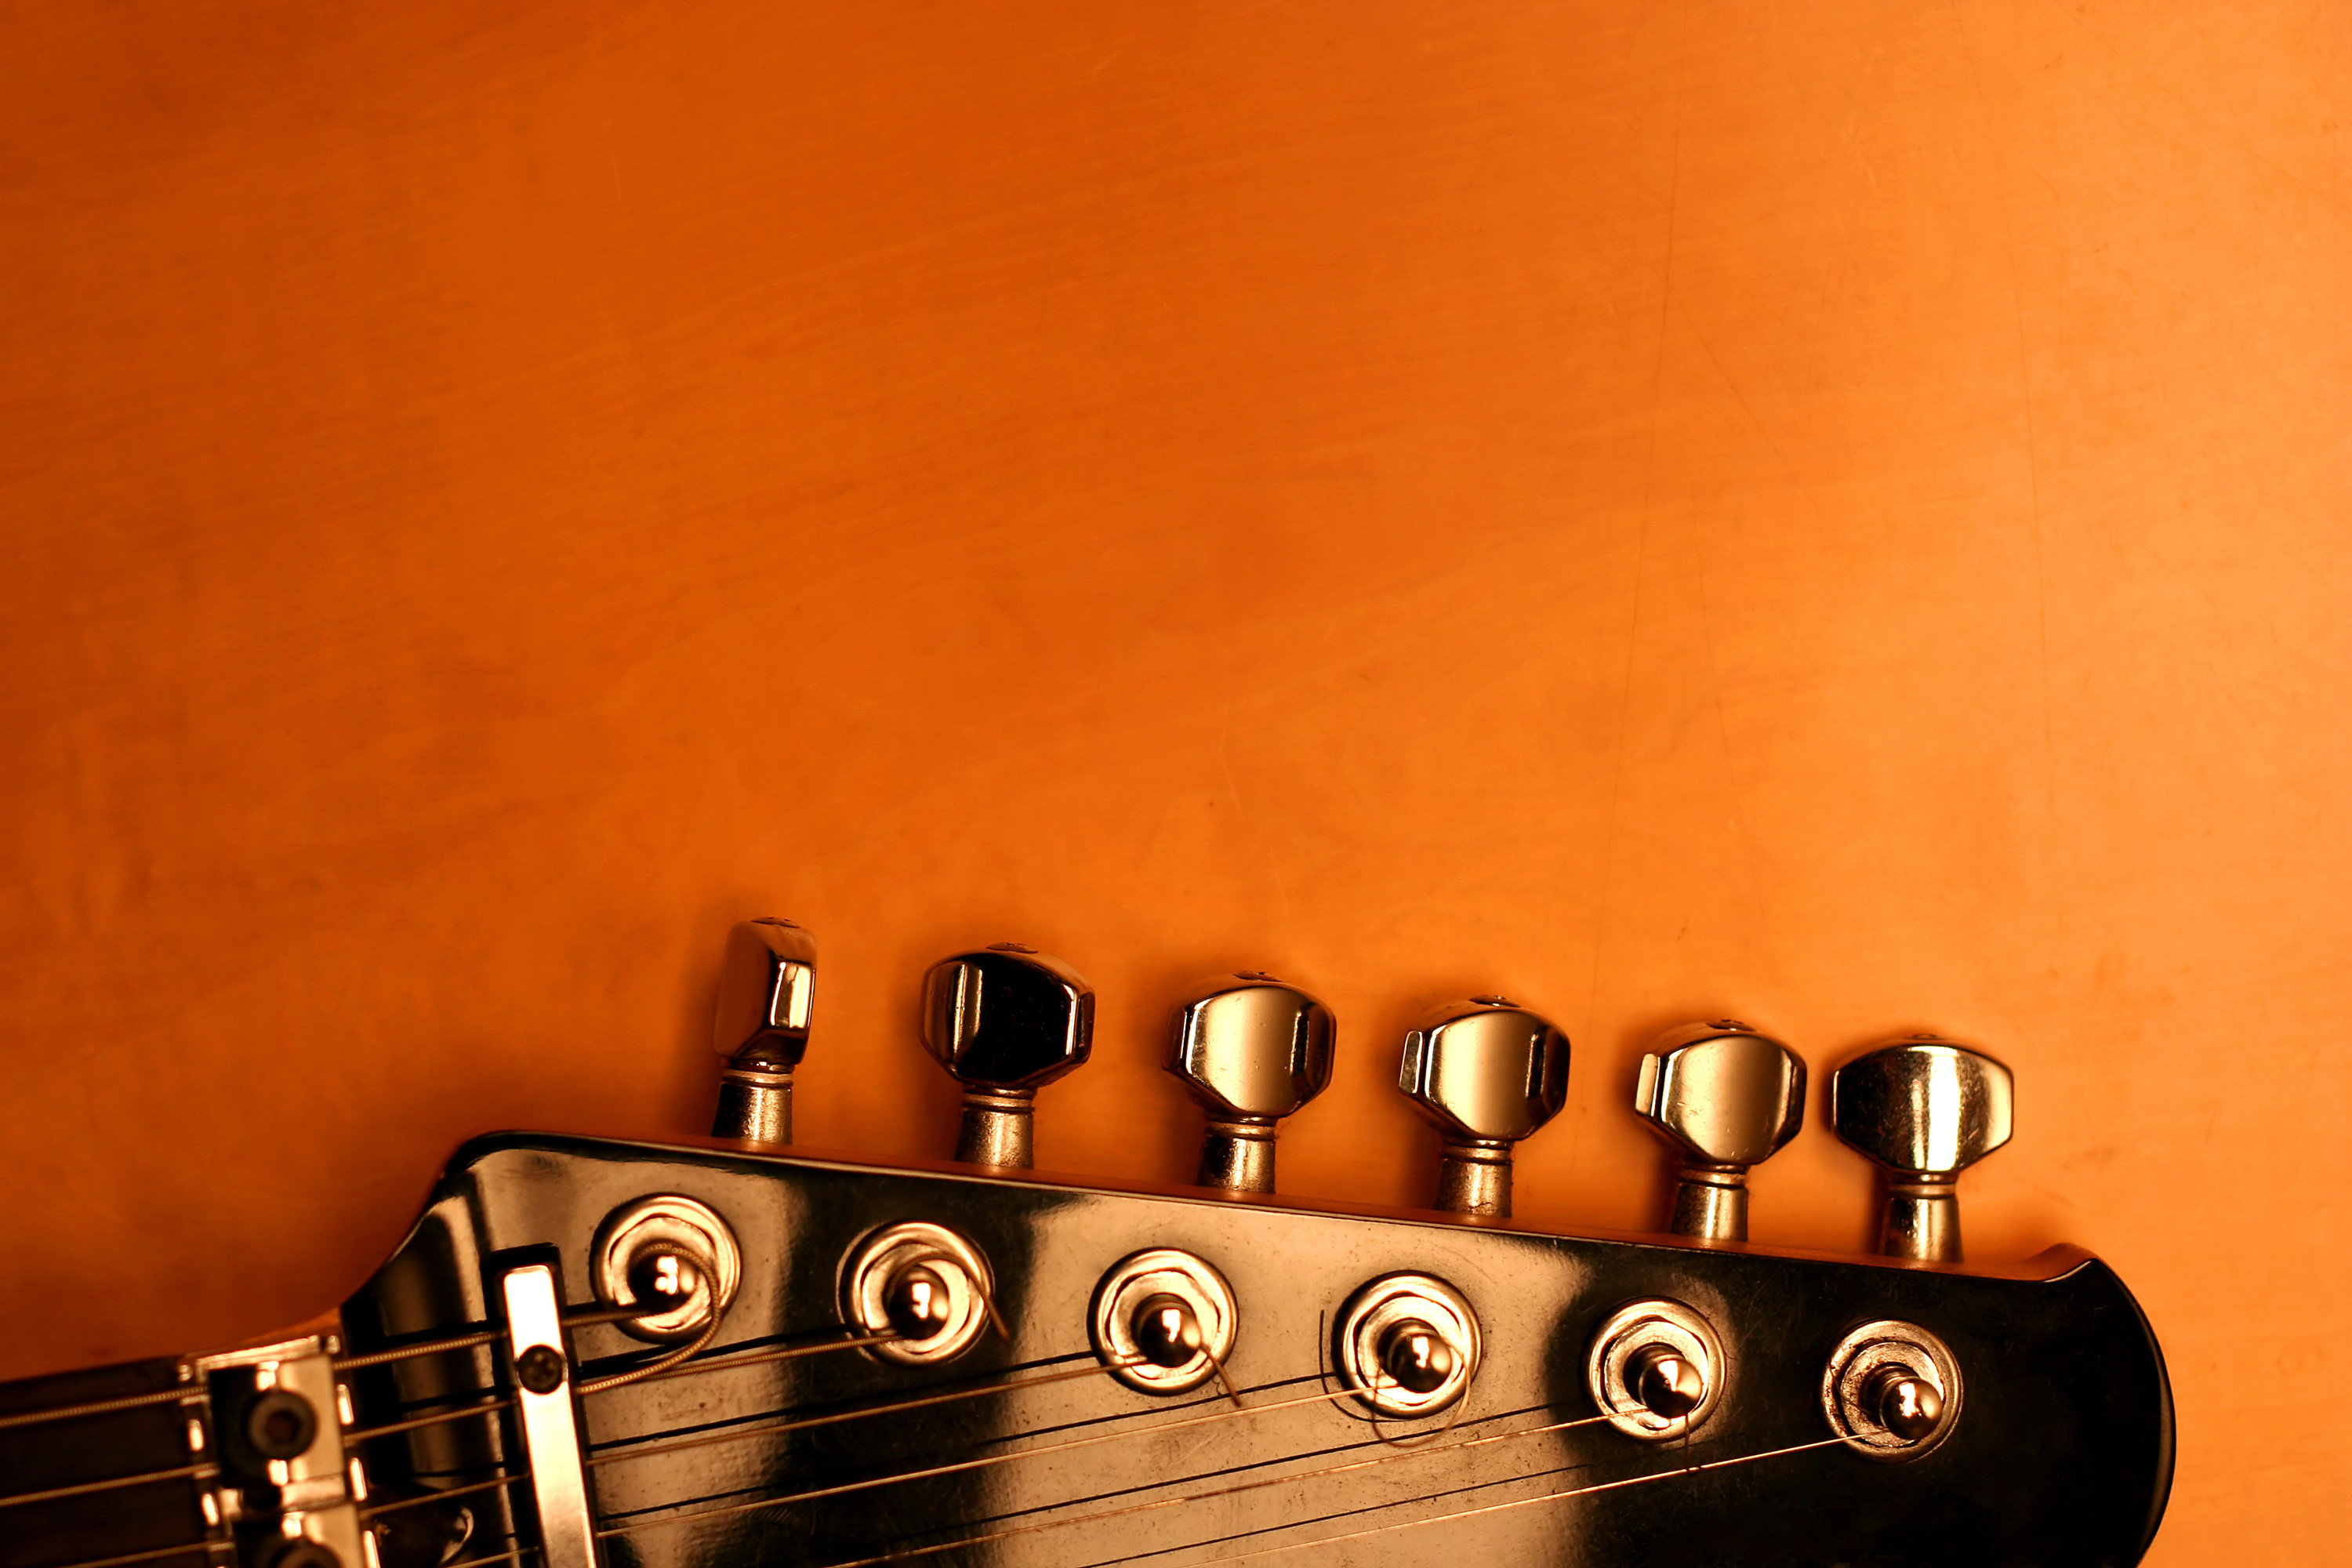 Guitar iPhone Wallpapers on WallpaperDog